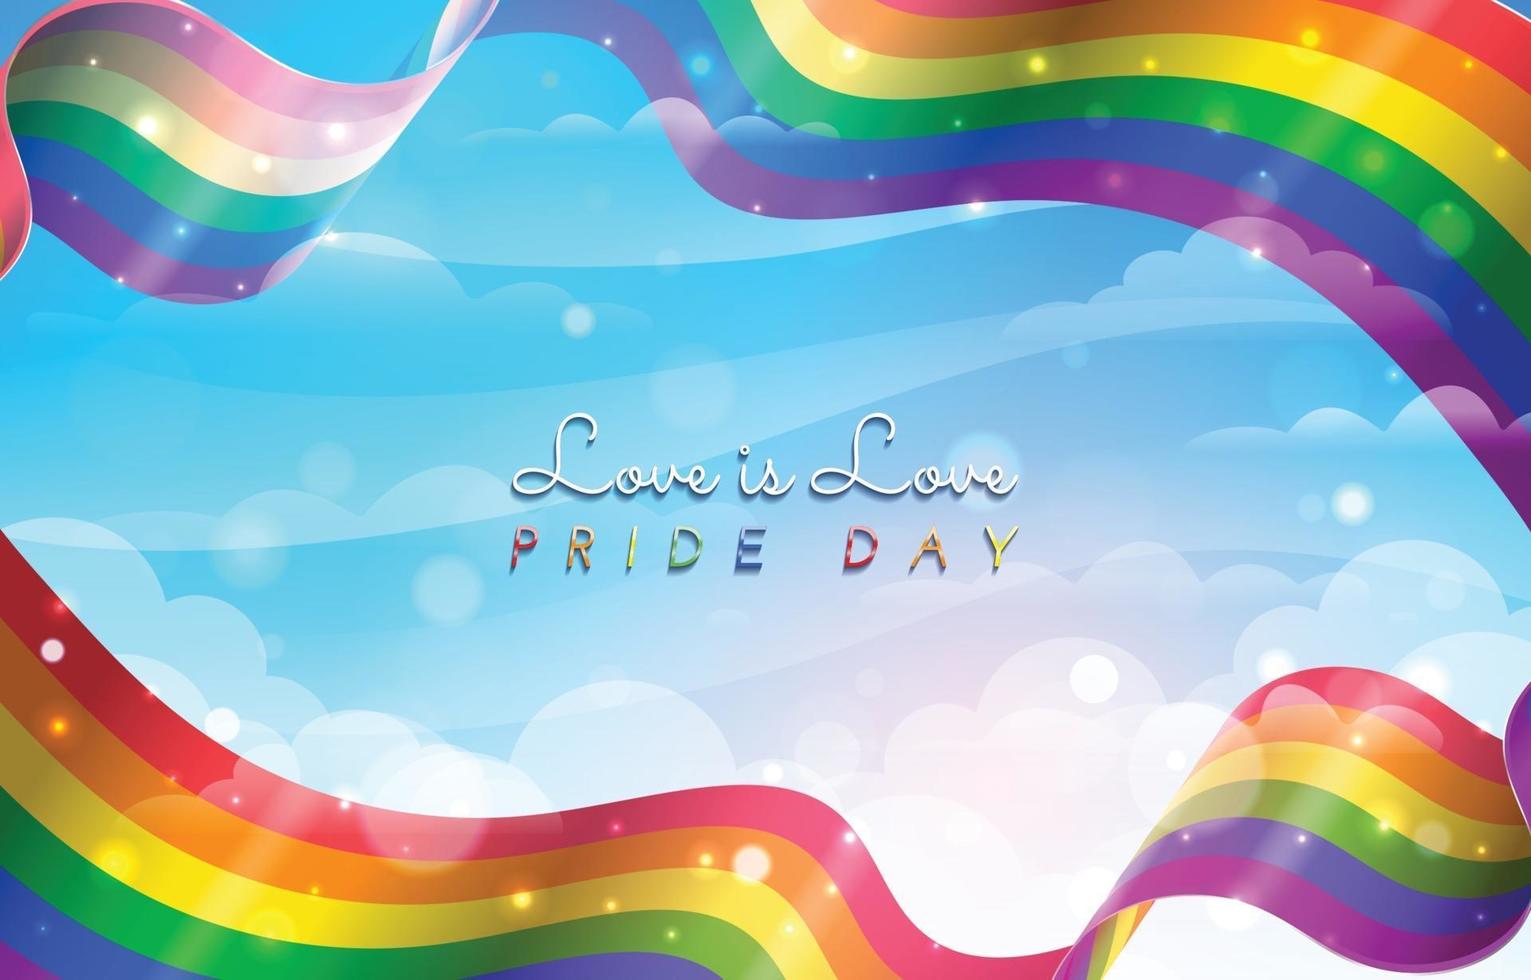 Pride Day Celebration Background Concept vector